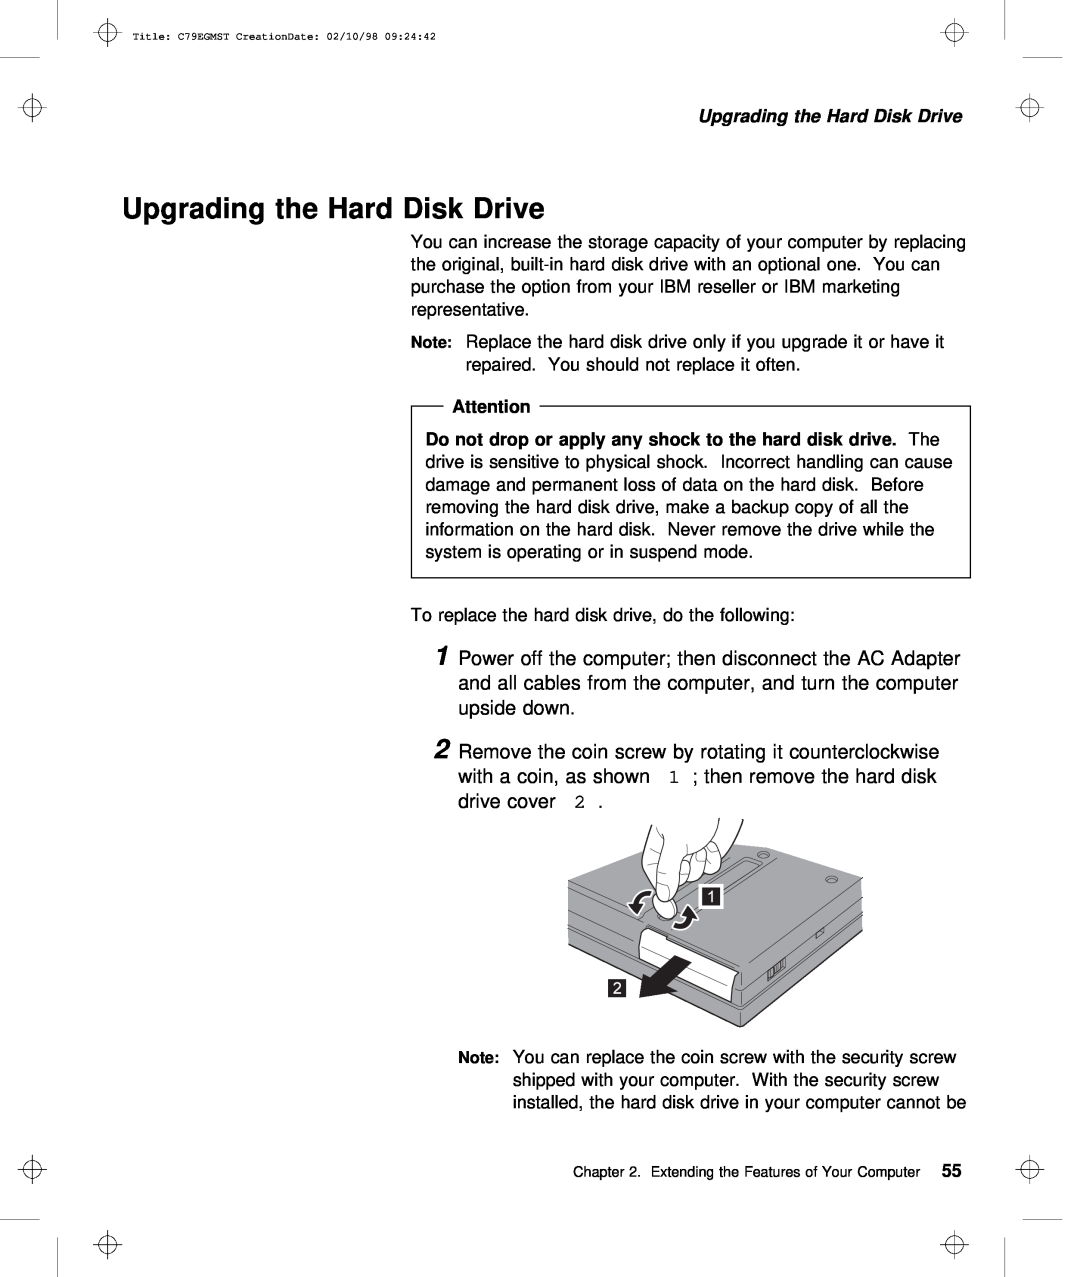 IBM C79EGMST manual Upgrading the Hard Disk Drive 